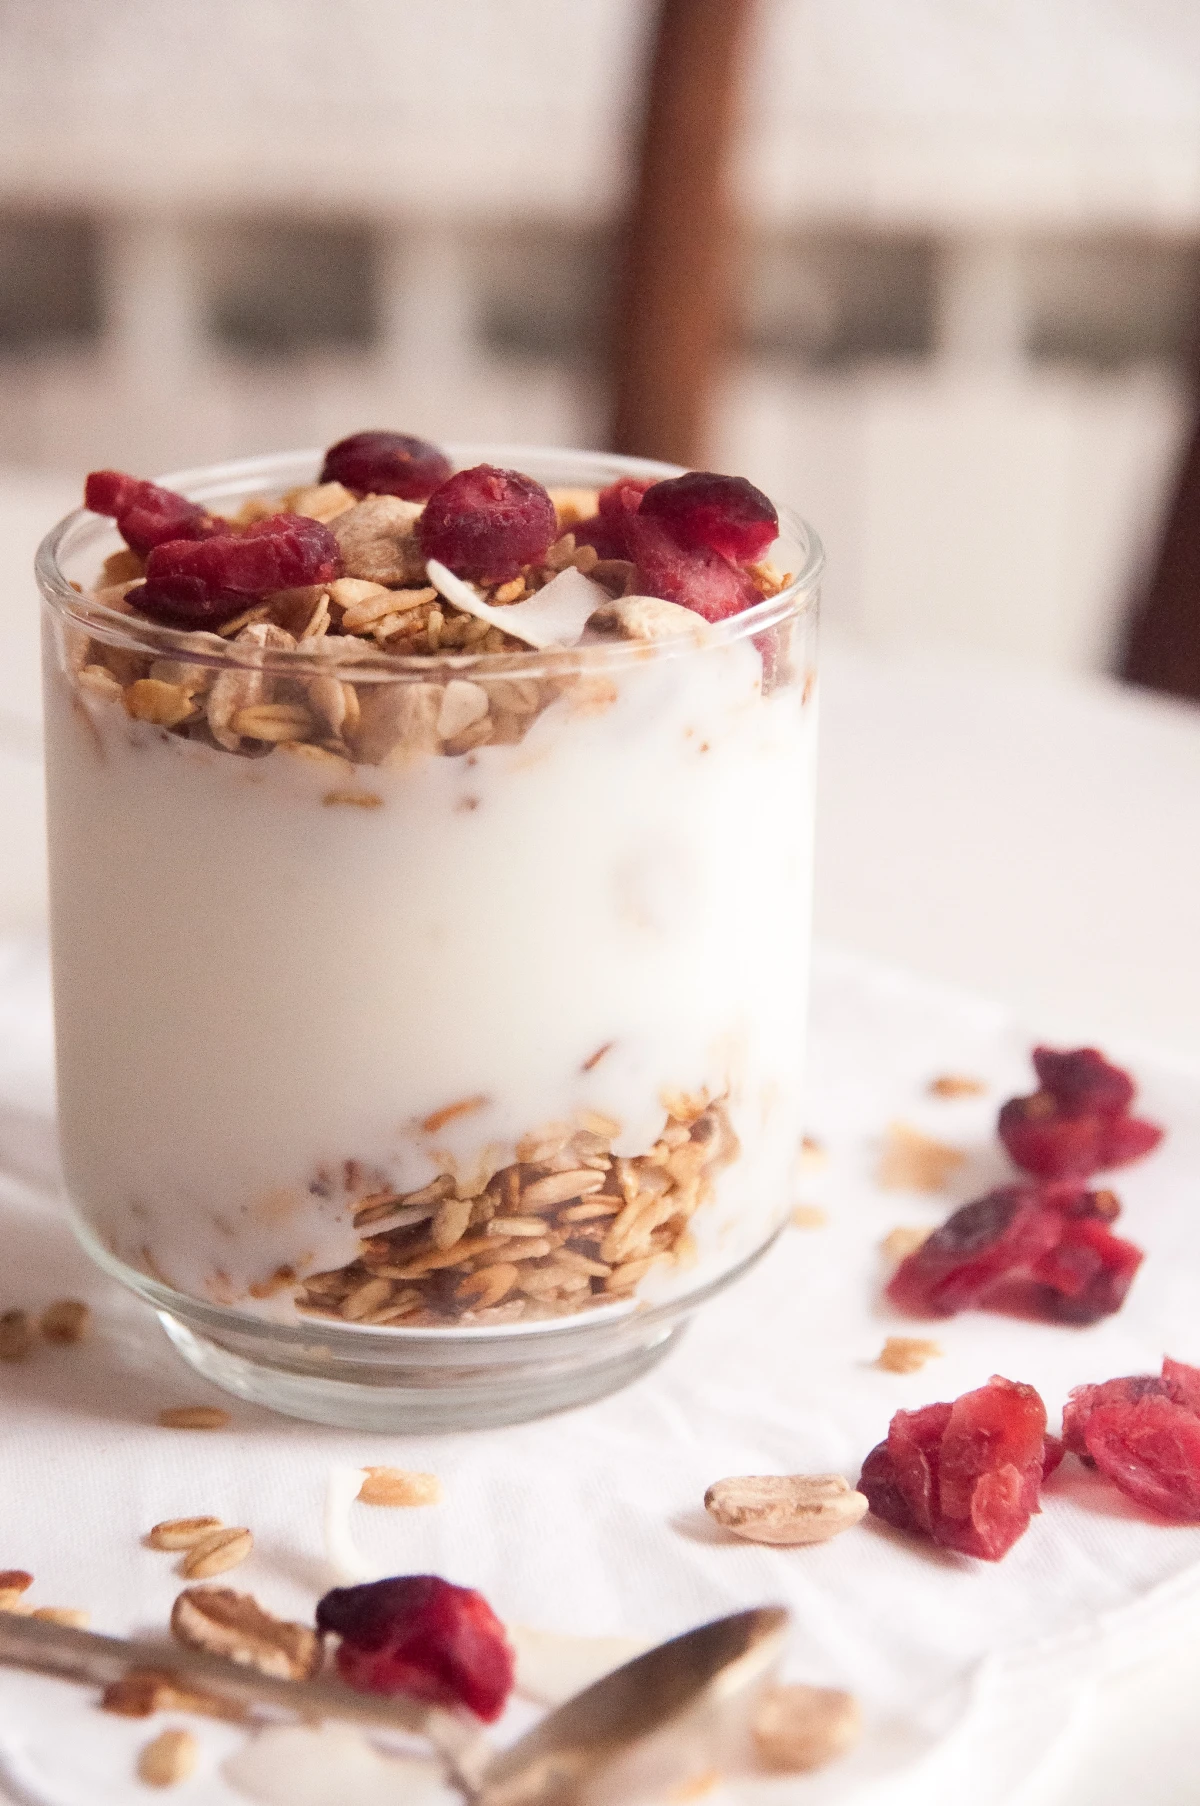 yogurt with fruit and oats